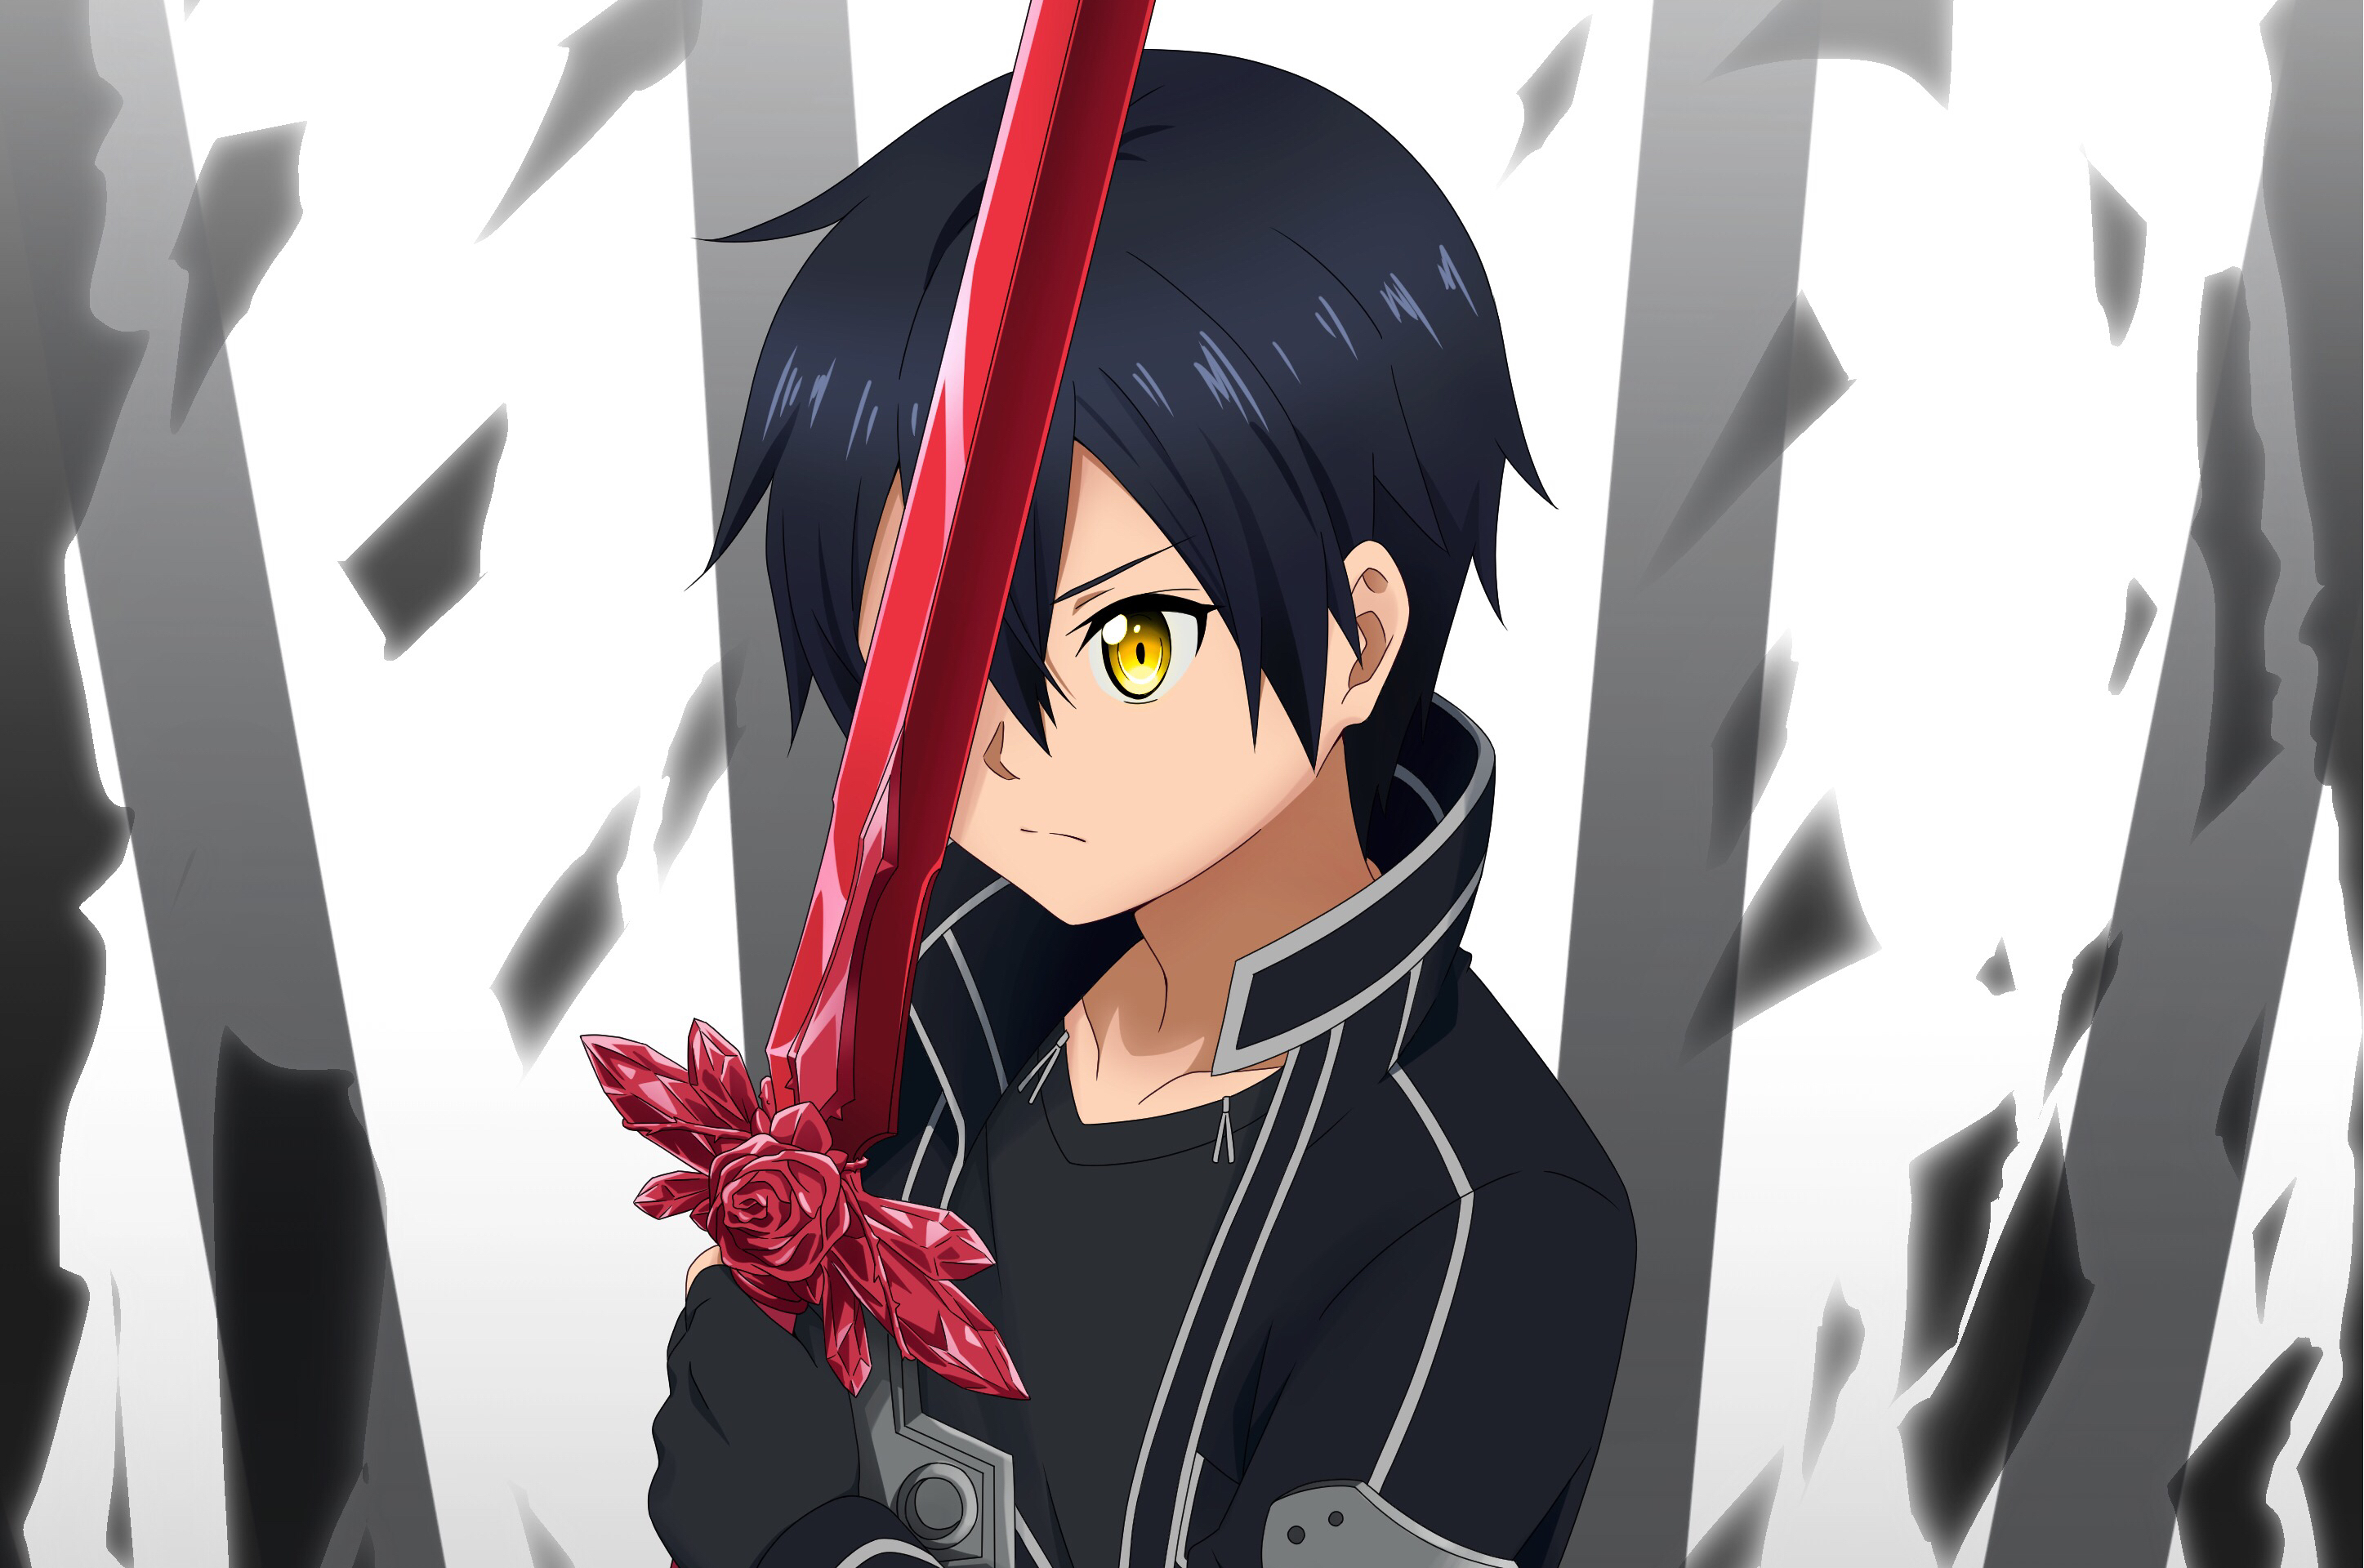 Download Kazuto Kirigaya Kirito Sword Art Online Anime Sword Art Online Alicization Hd